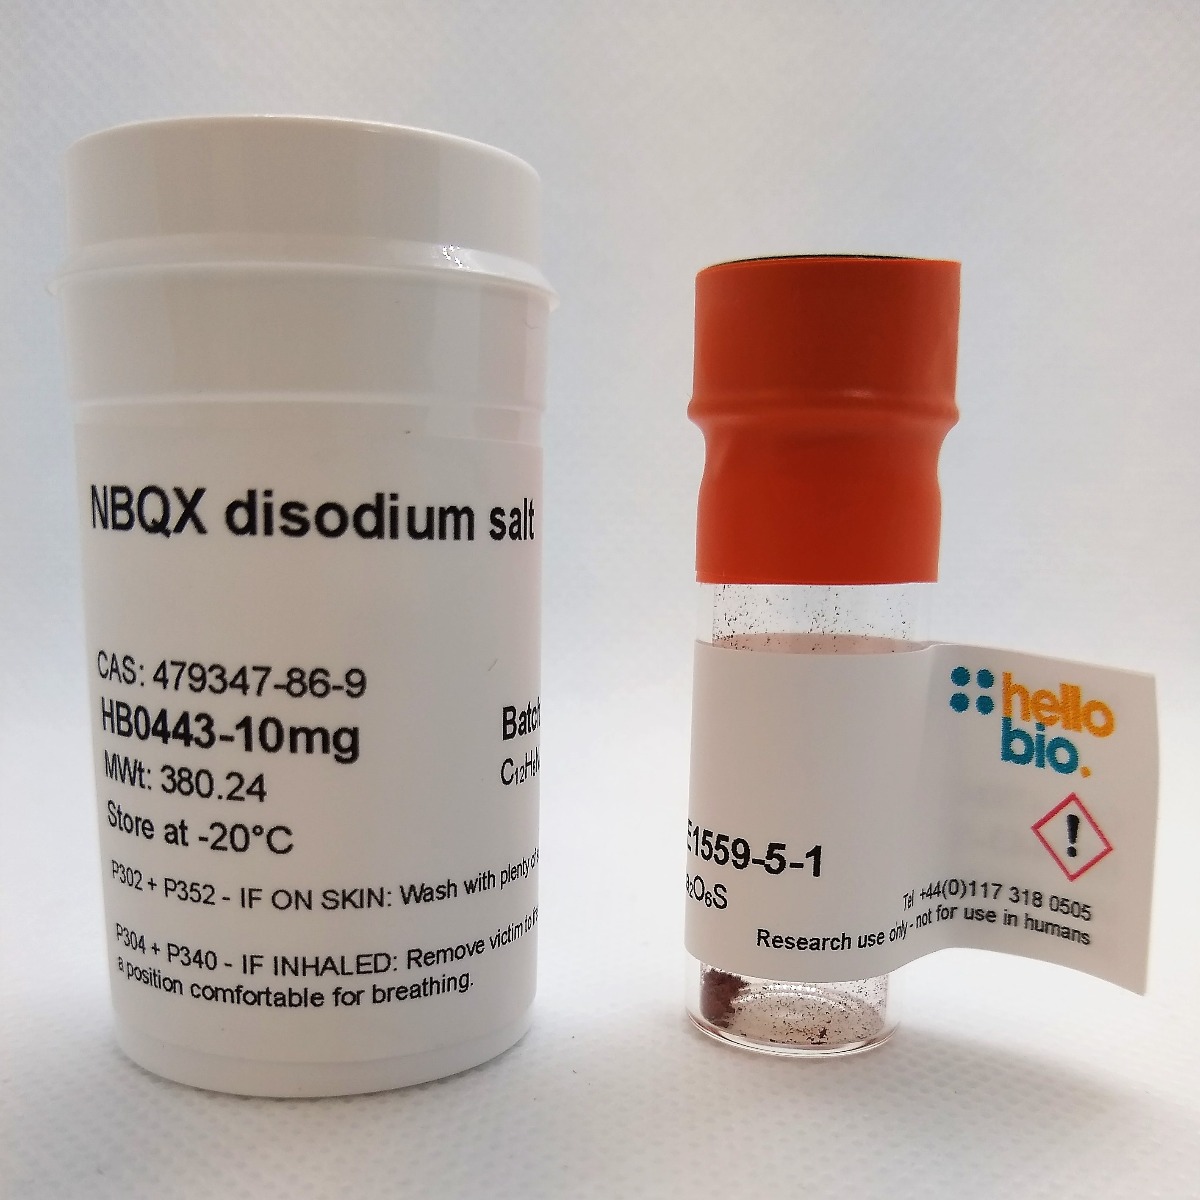 NBQX disodium salt product vial image | Hello Bio